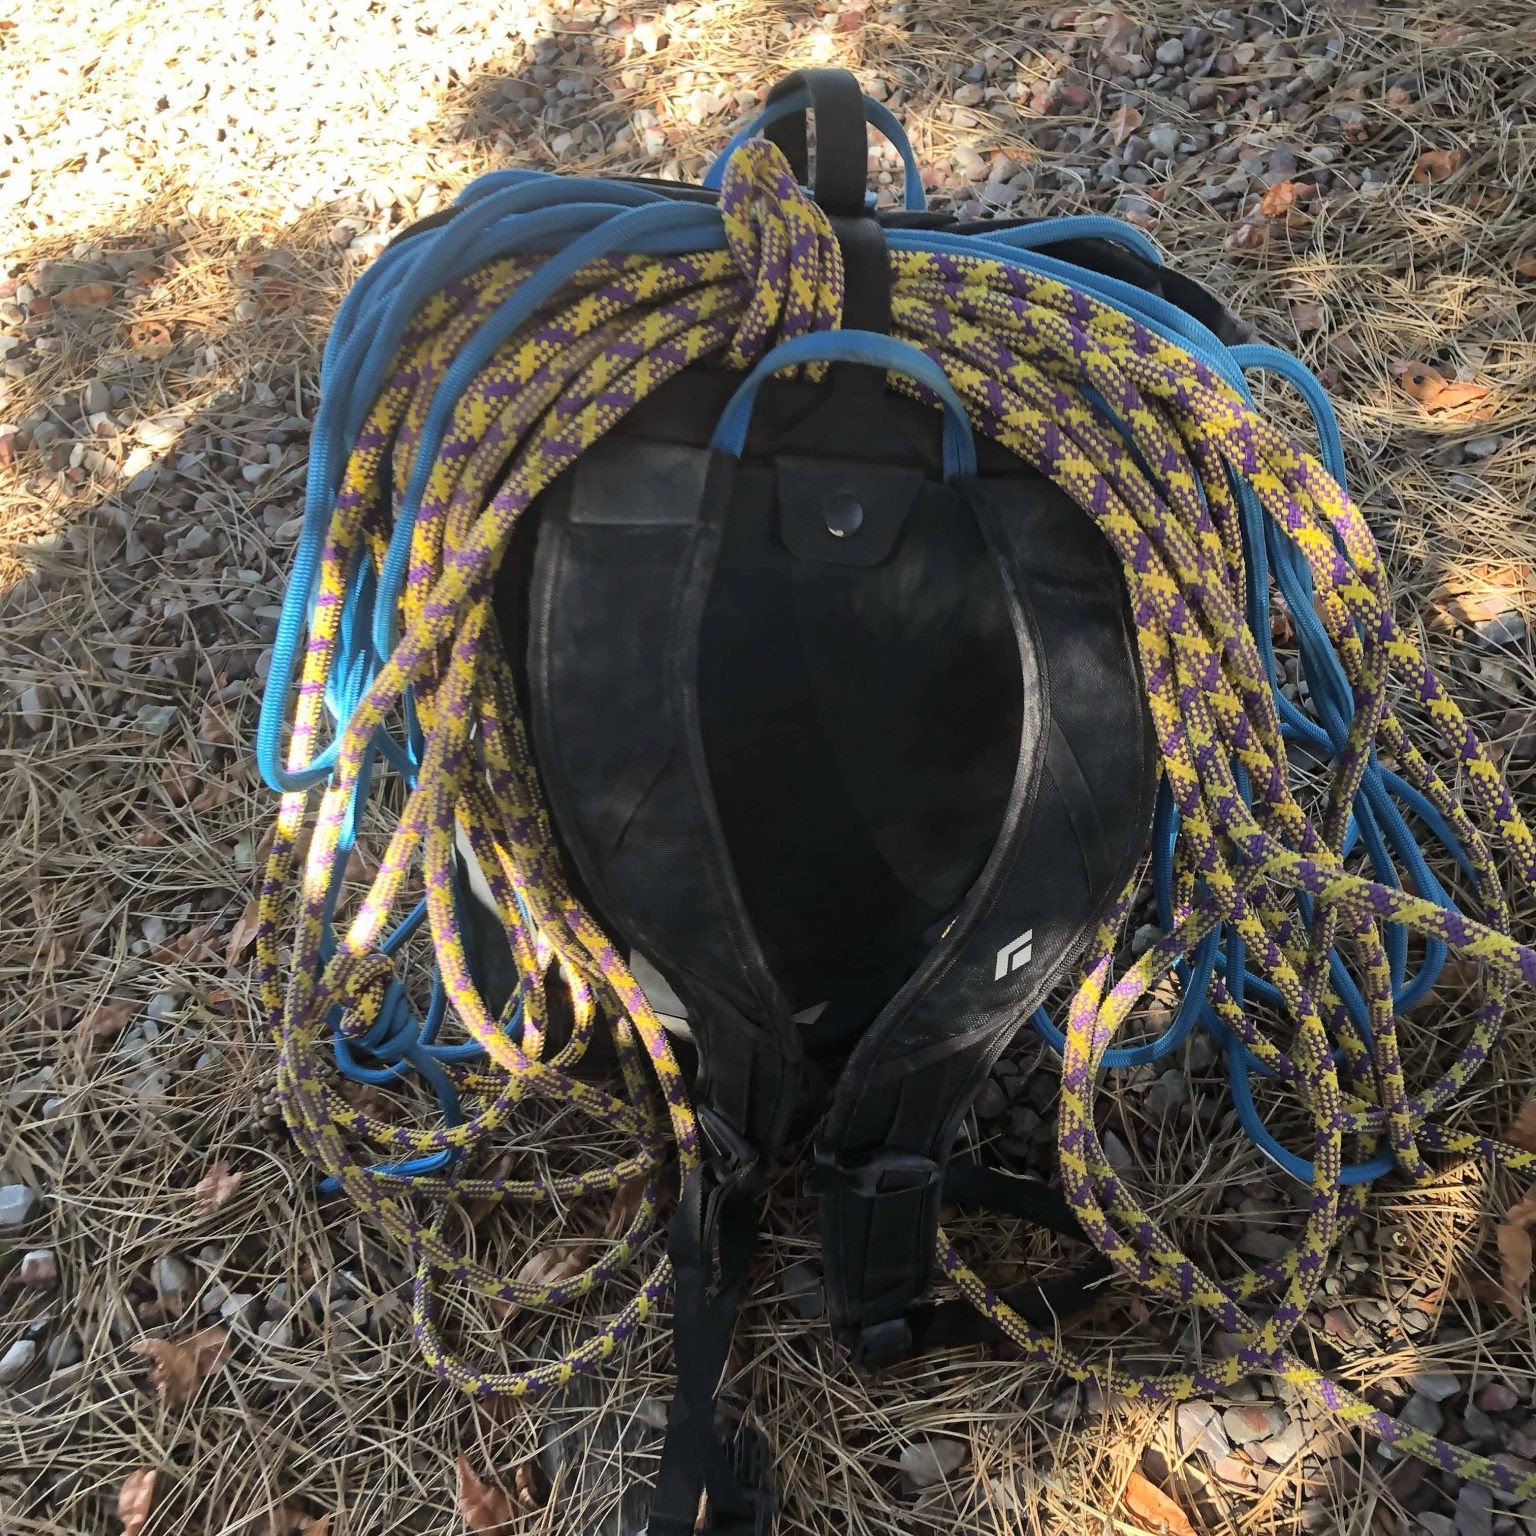 Black Diamond Creek 20 Backpack Climbing Gear Bag